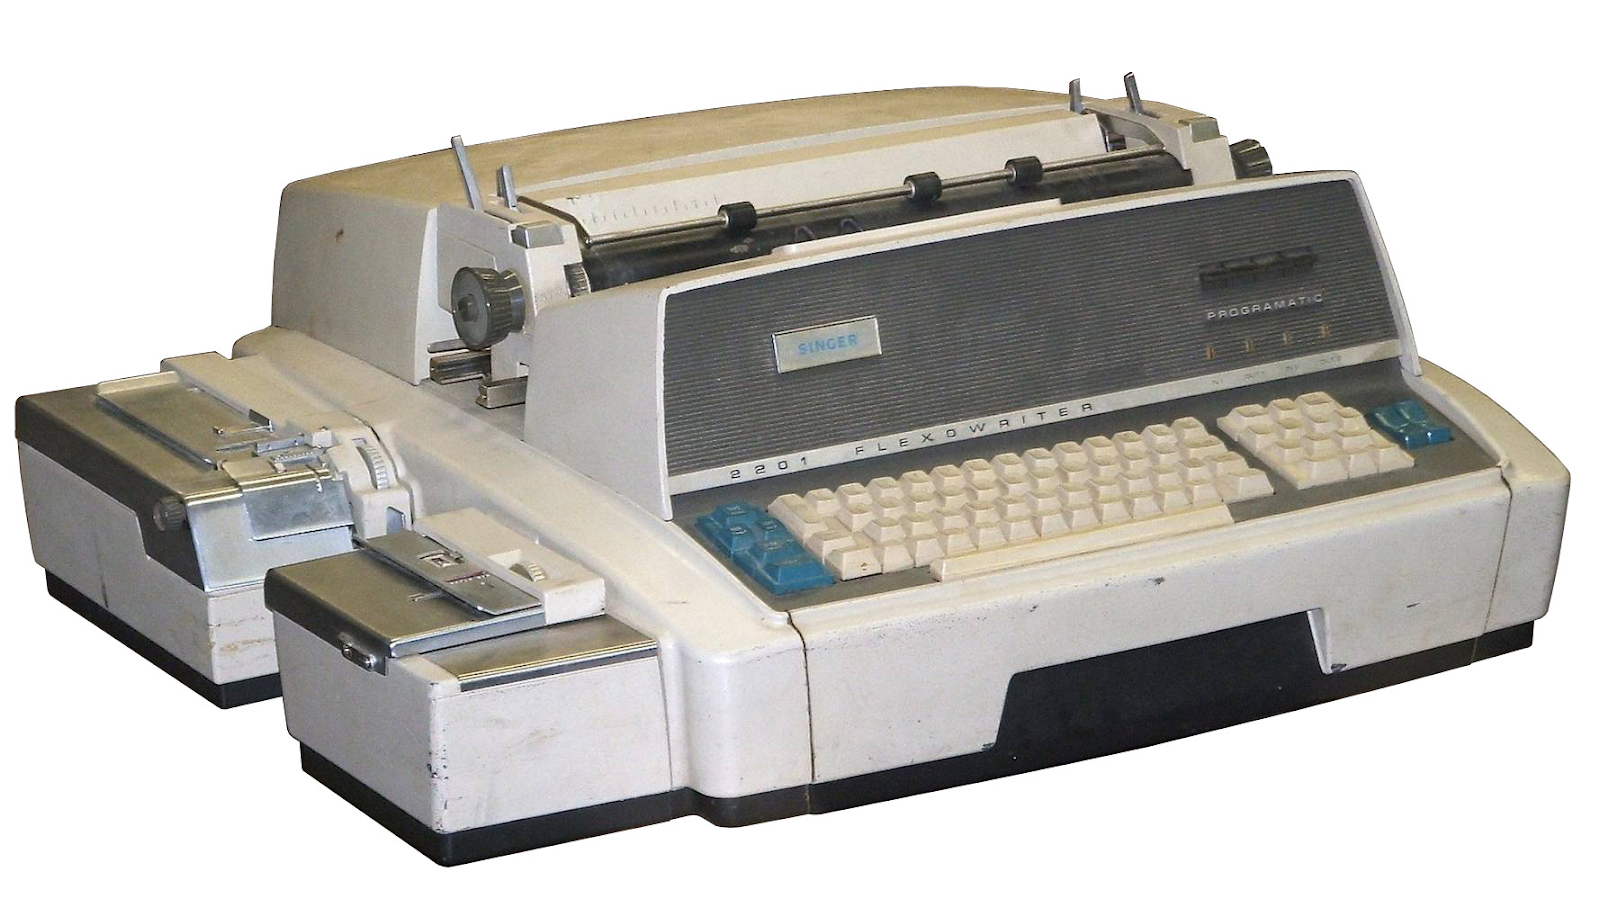 Печатное устройство Flexowriter 2201 Programmatic, https://upload.wikimedia.org